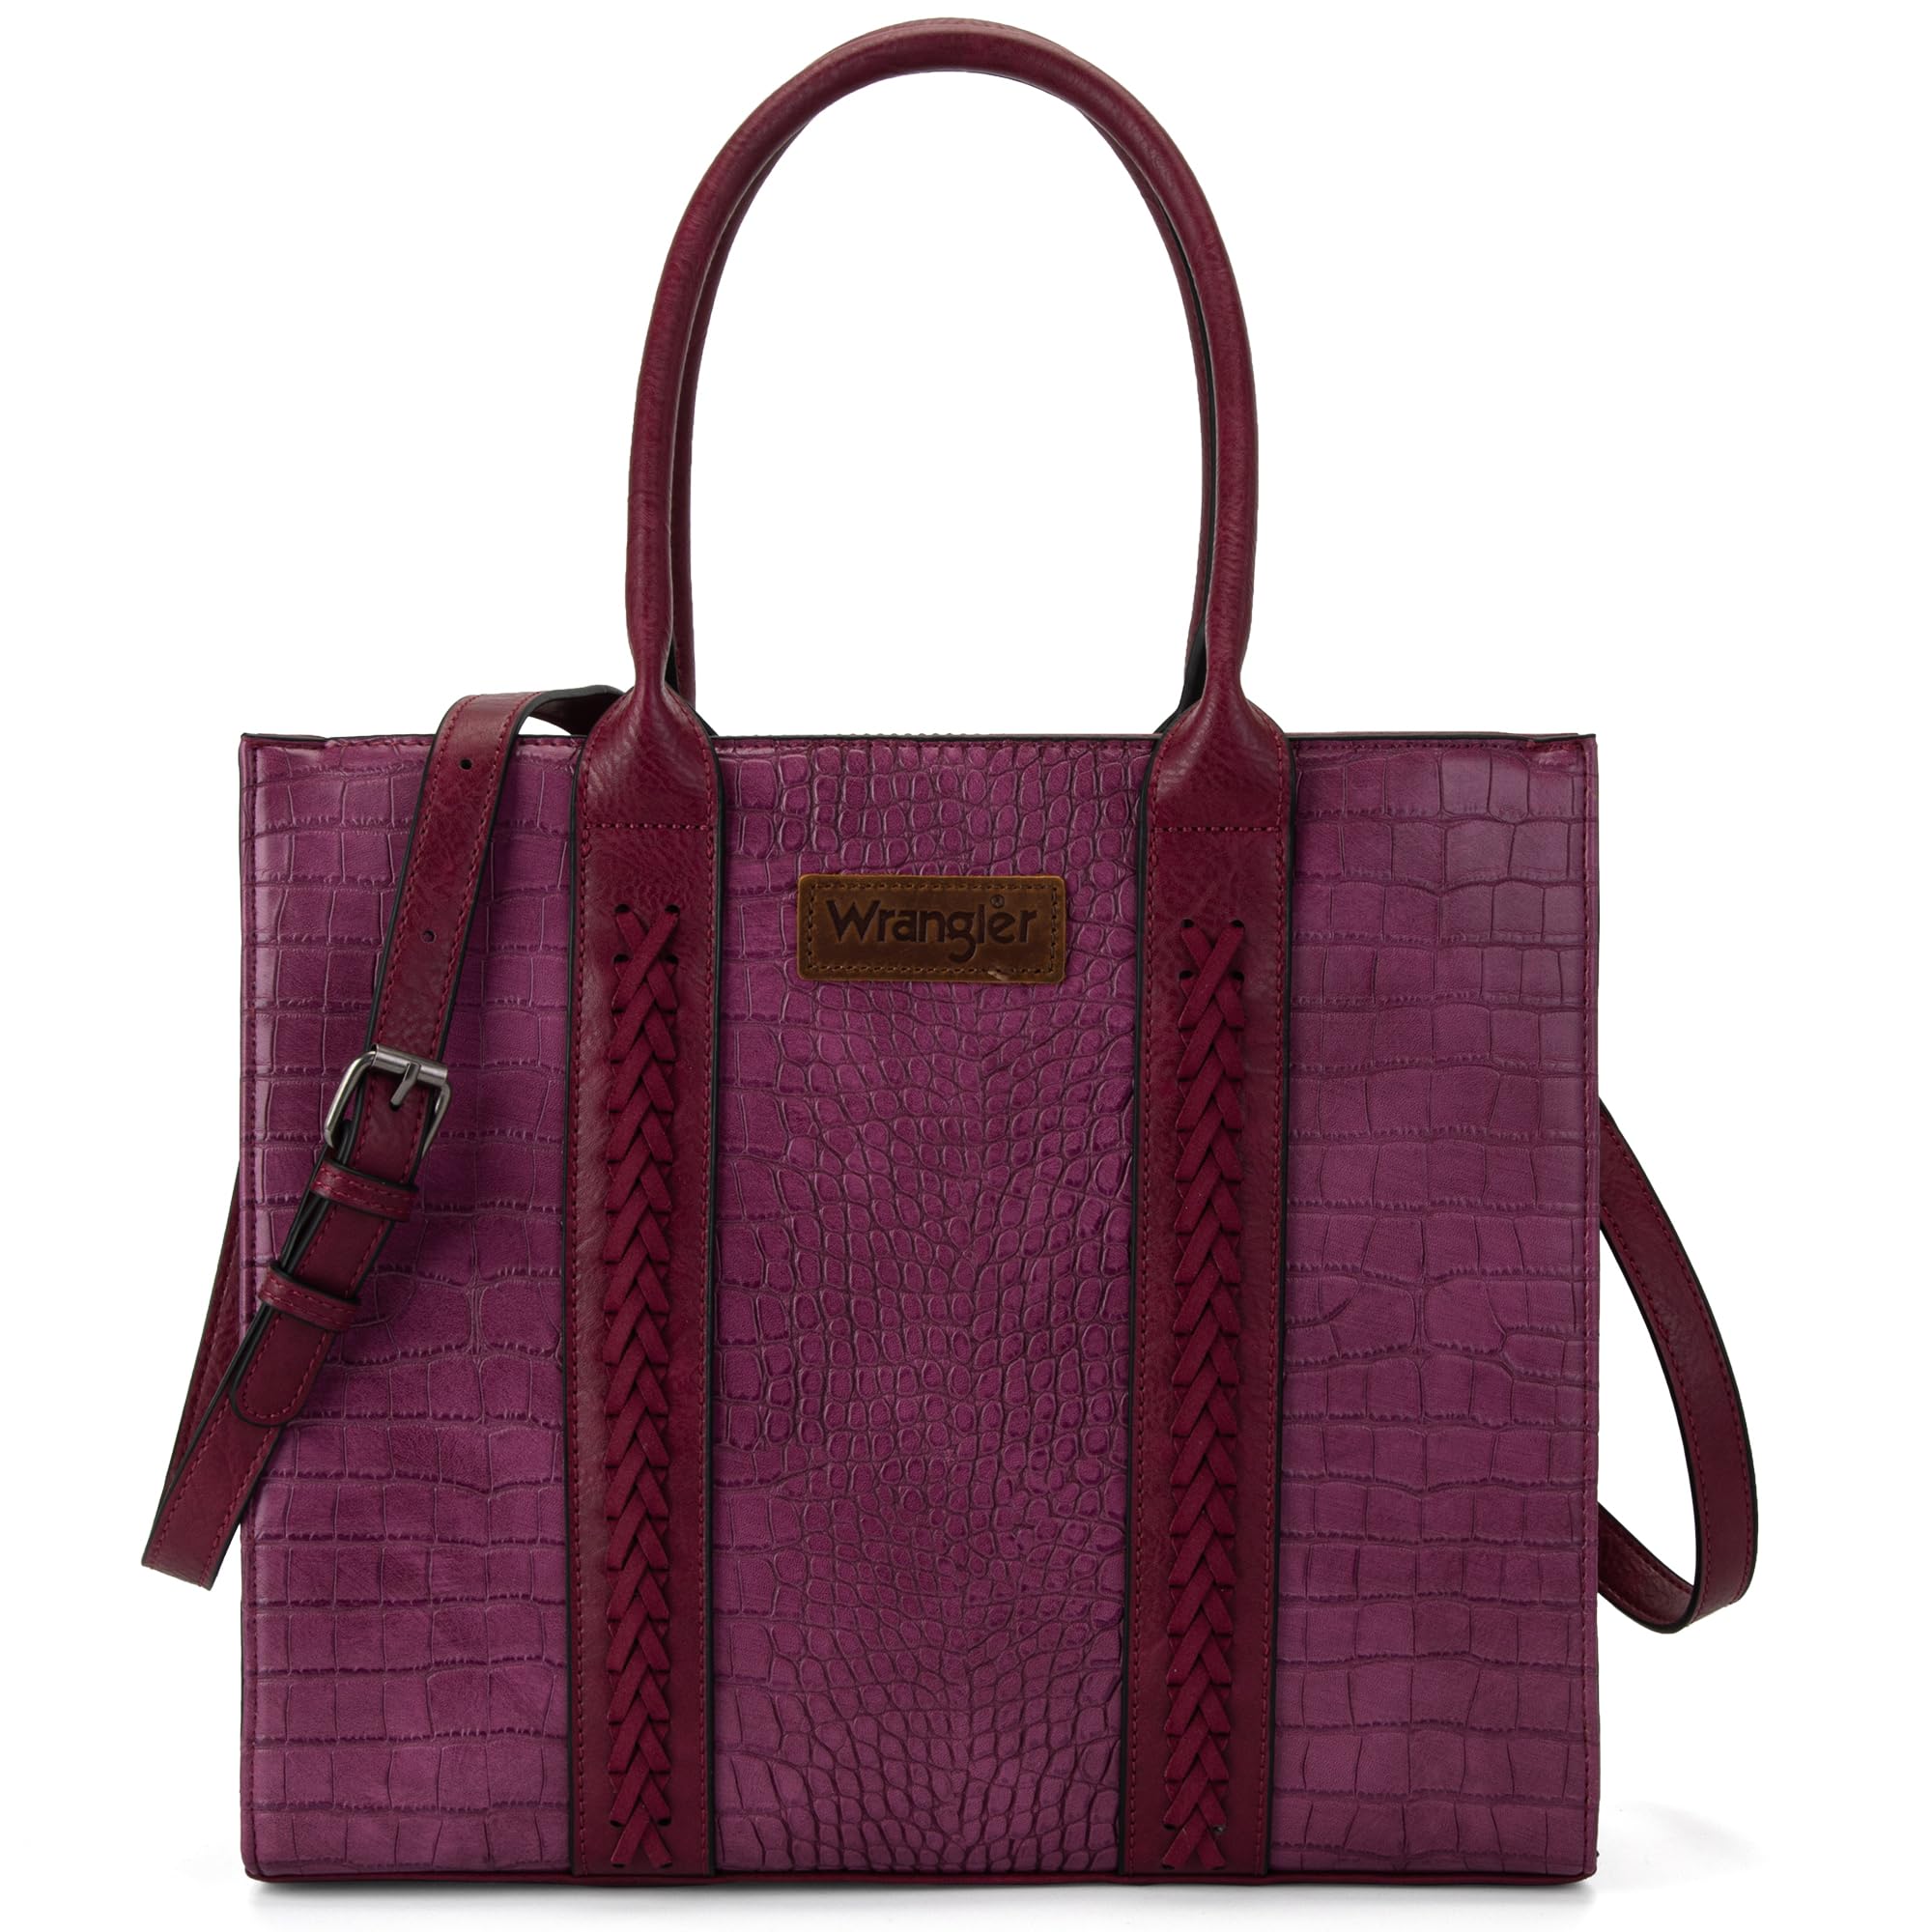 Wrangler Large Work Tote Purse Bag w/ Strap Top-Handle Handbag (Purple Crocodile) $21 + Free Shipping w/ Prime or on $35+